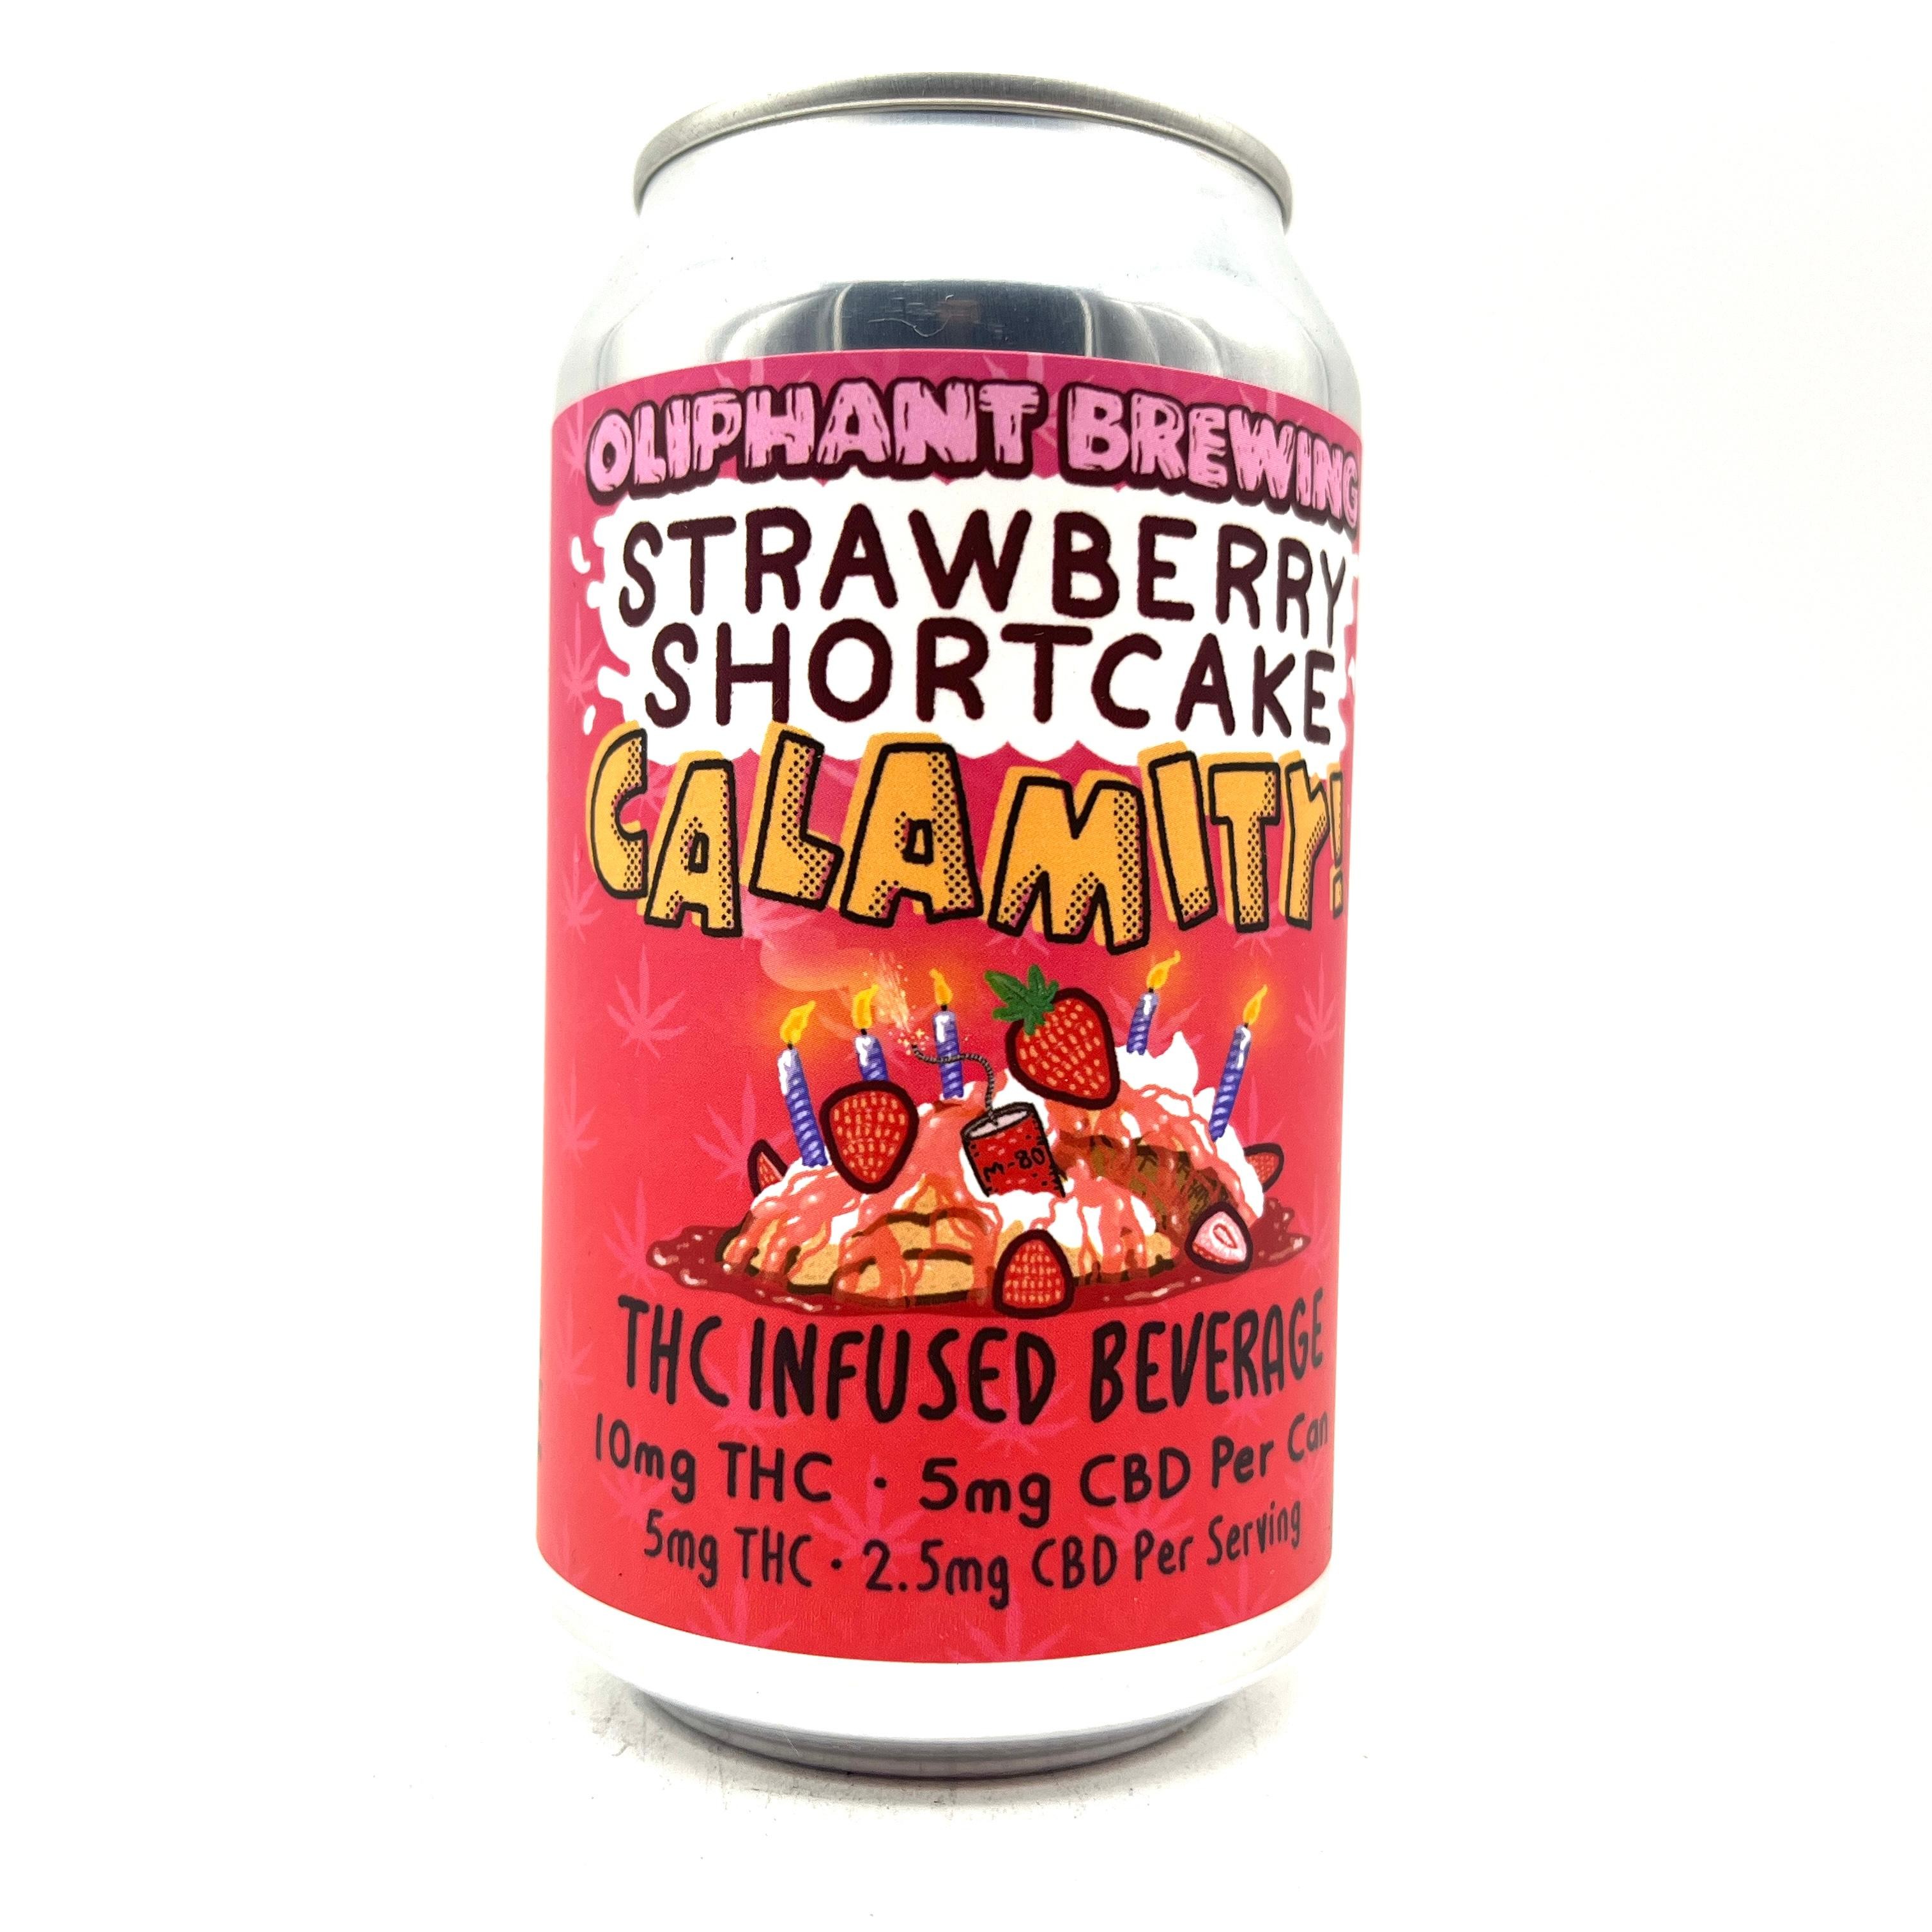 Oliphant - Strawberry Shortcake Calamity! (Non-Alcoholic / 10mg Delta-9 THC / 5mg CBD)